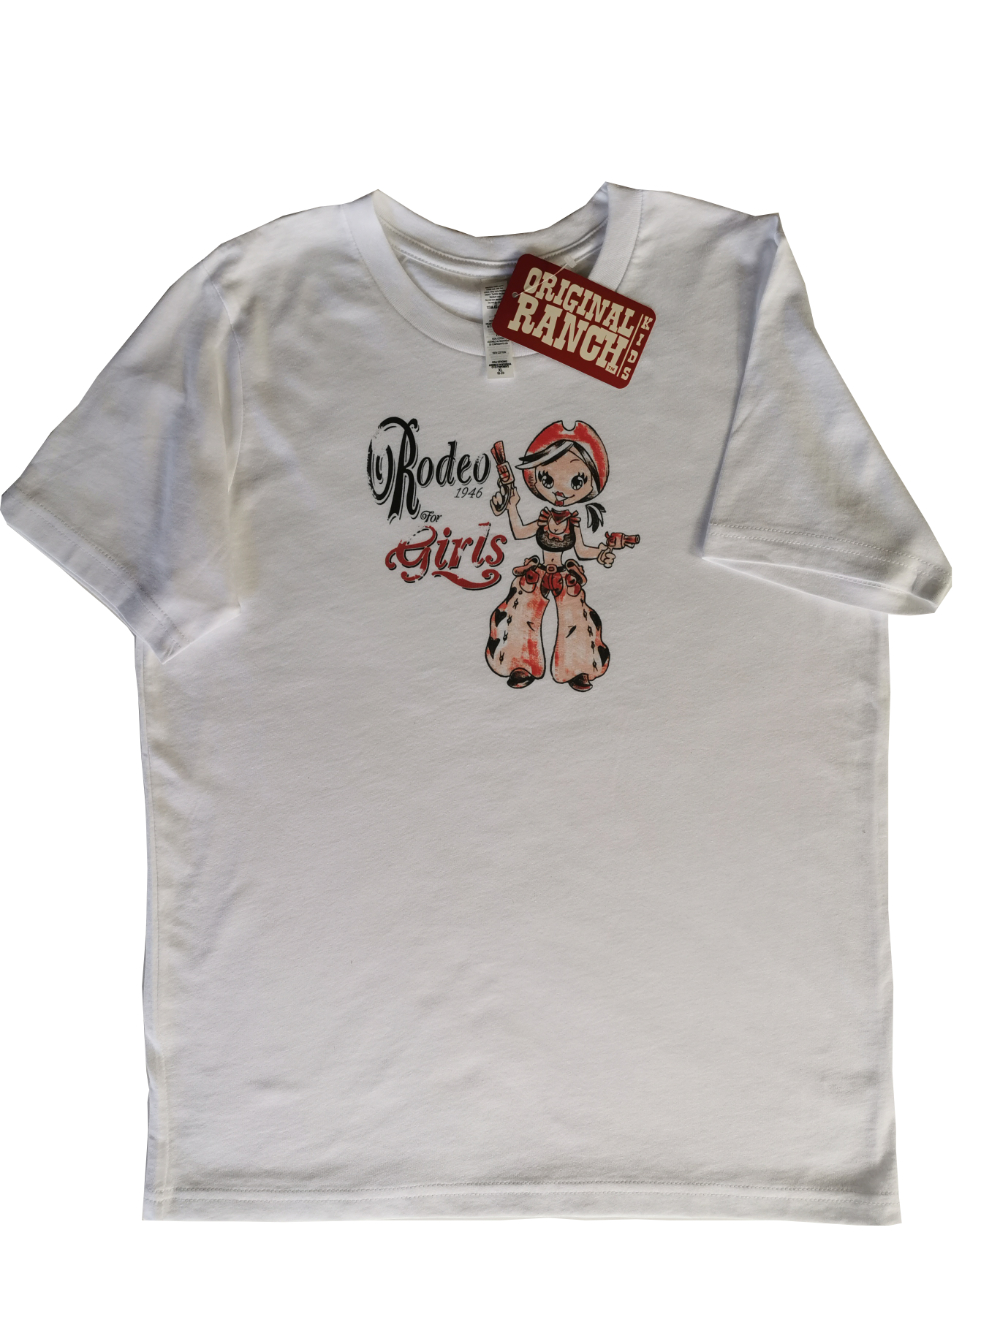 Girls' T-shirt "Rodeo for Girls